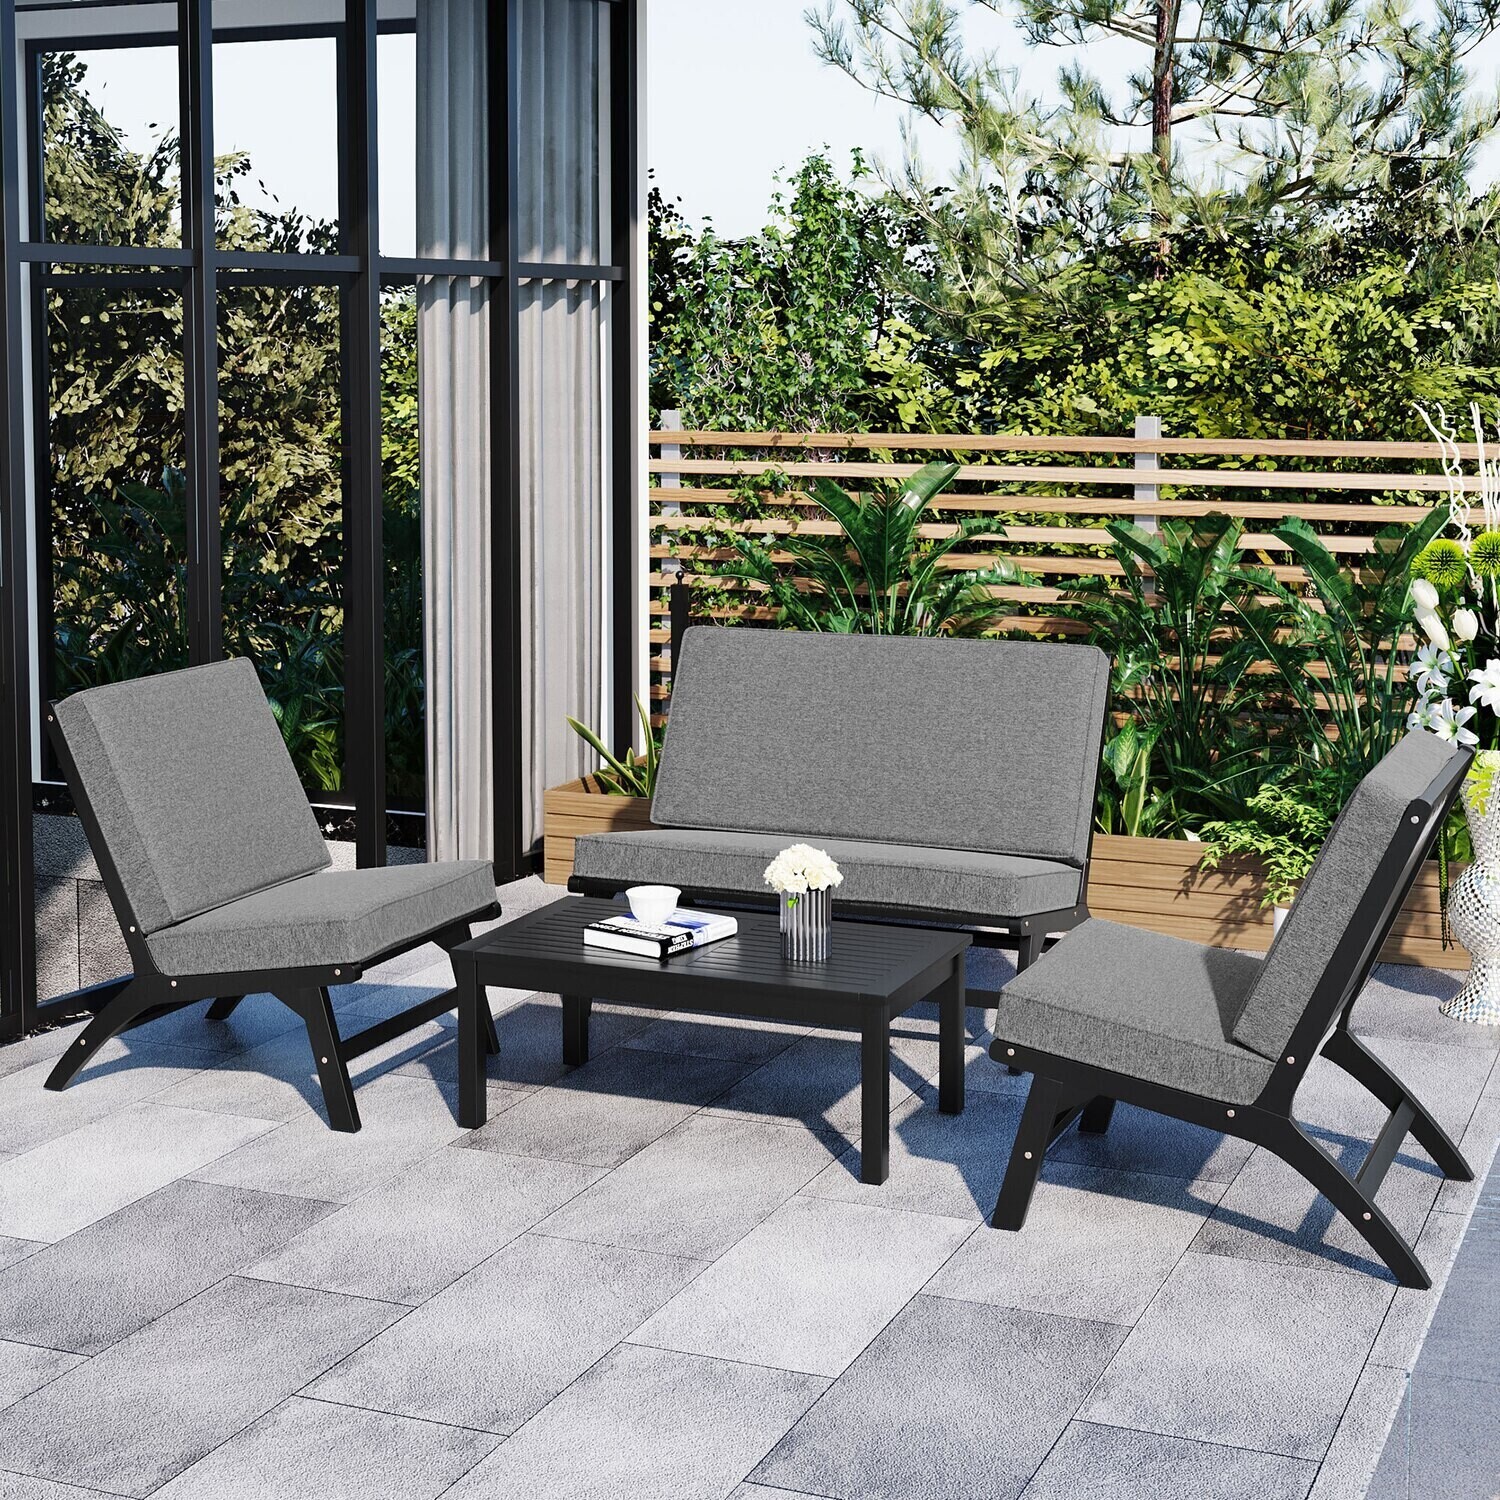 GO 4-Piece V-shaped Seats set, Acacia Solid Wood Outdoor Sofa, Garden Furniture, Outdoor Seating, Black and Gray, Options: Black+ Gray+Acacia Wood